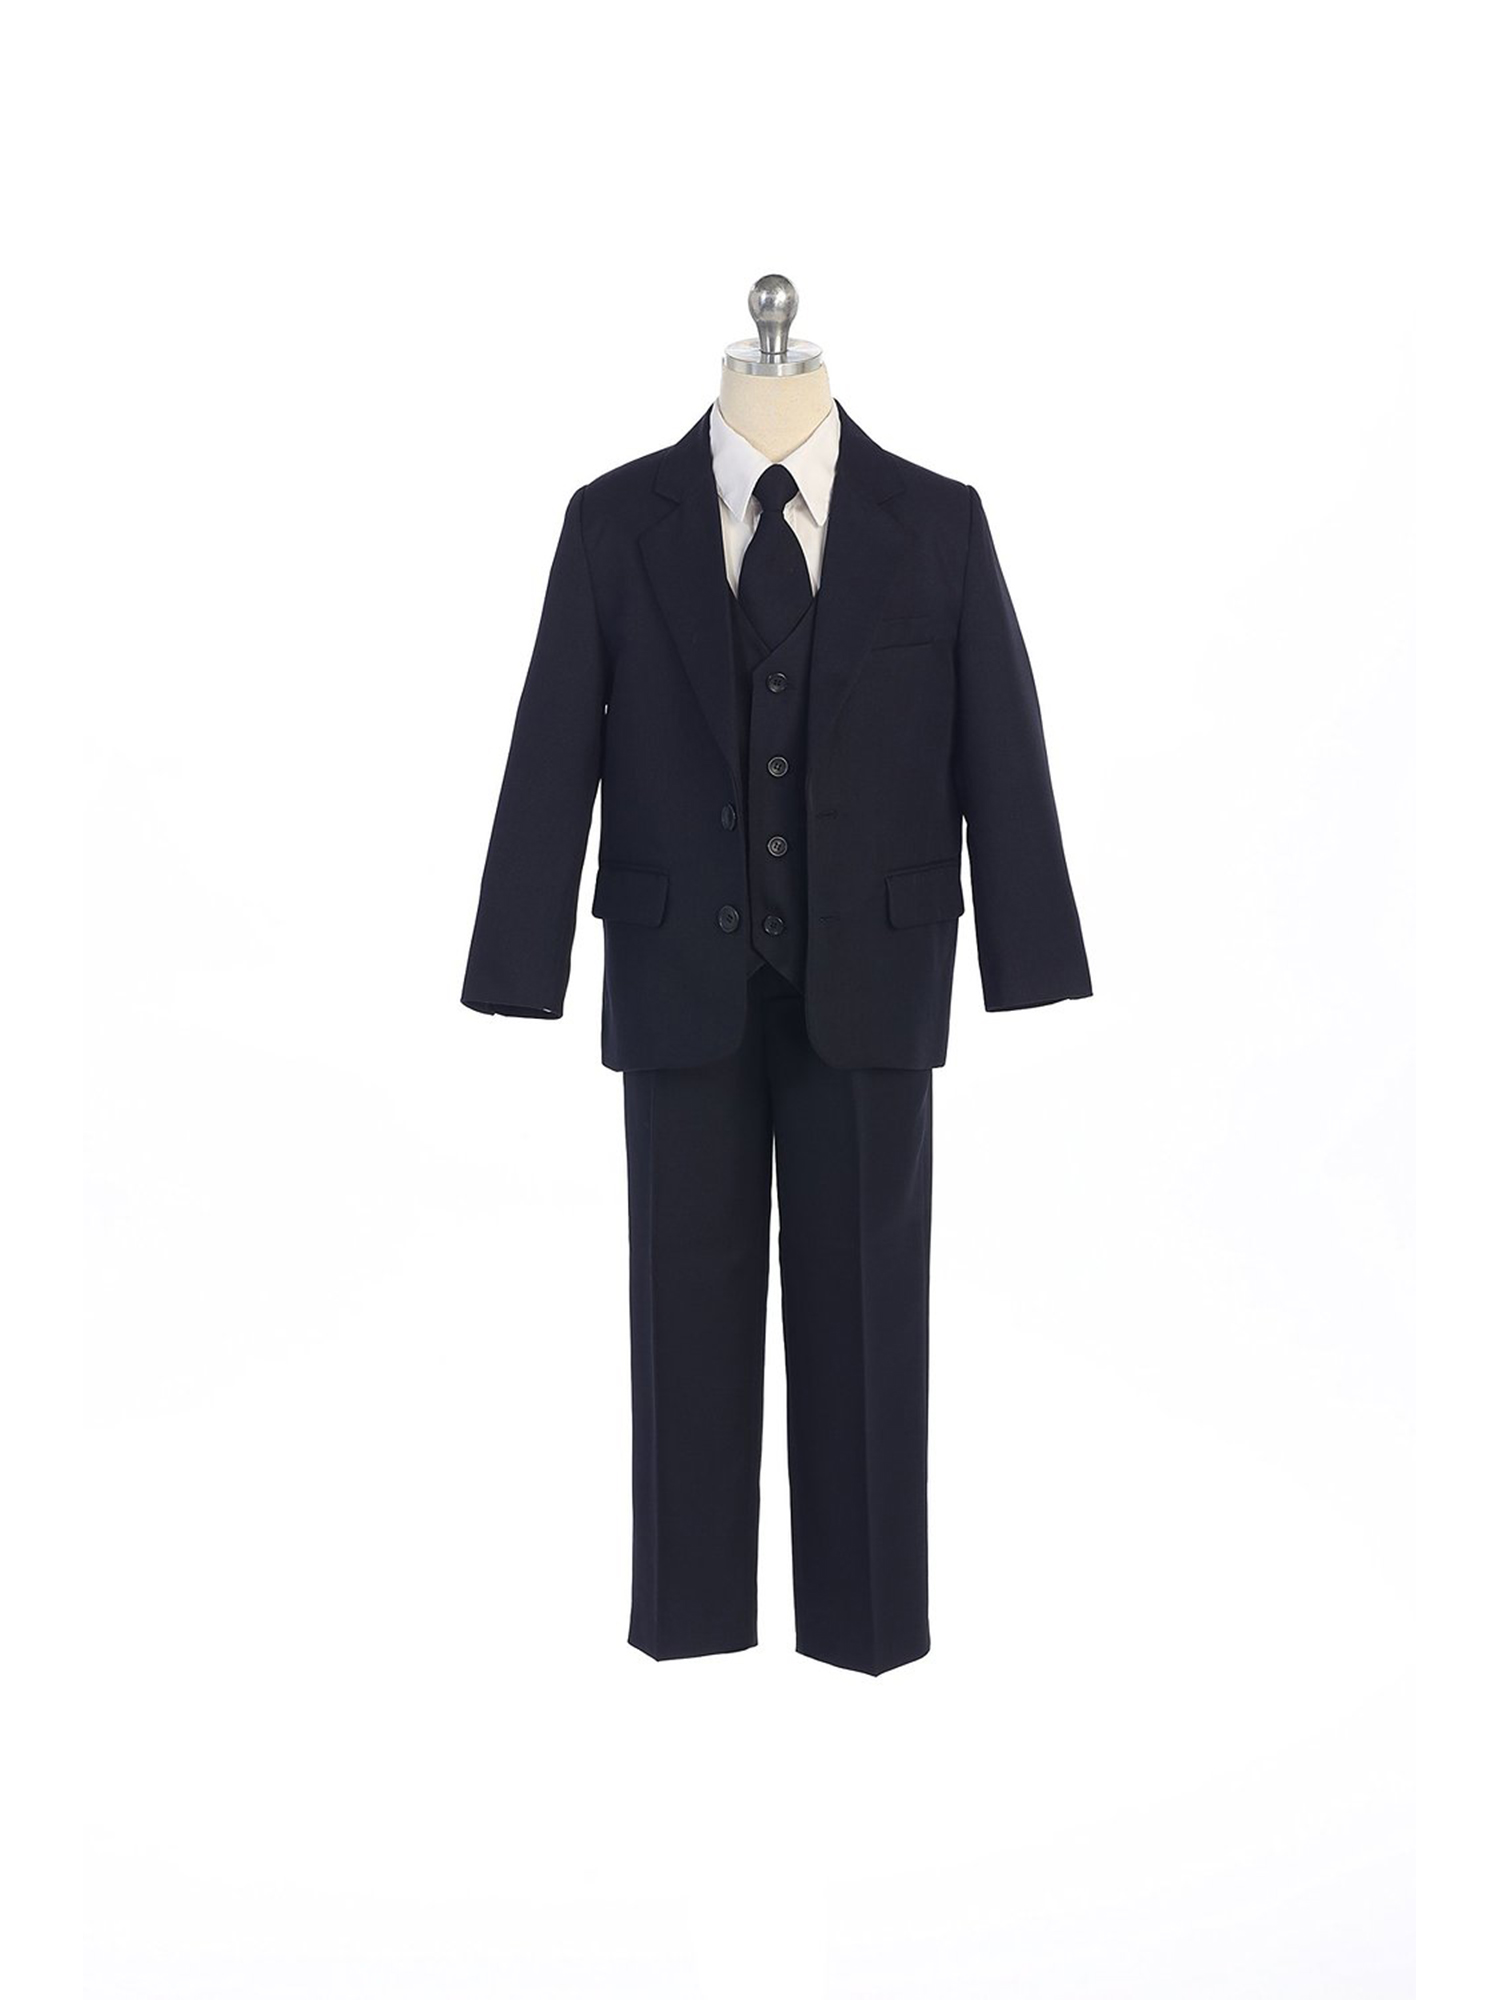 COLE Boys Suit with Shirt and Vest (5-Piece) - Navy Blue - Size 16